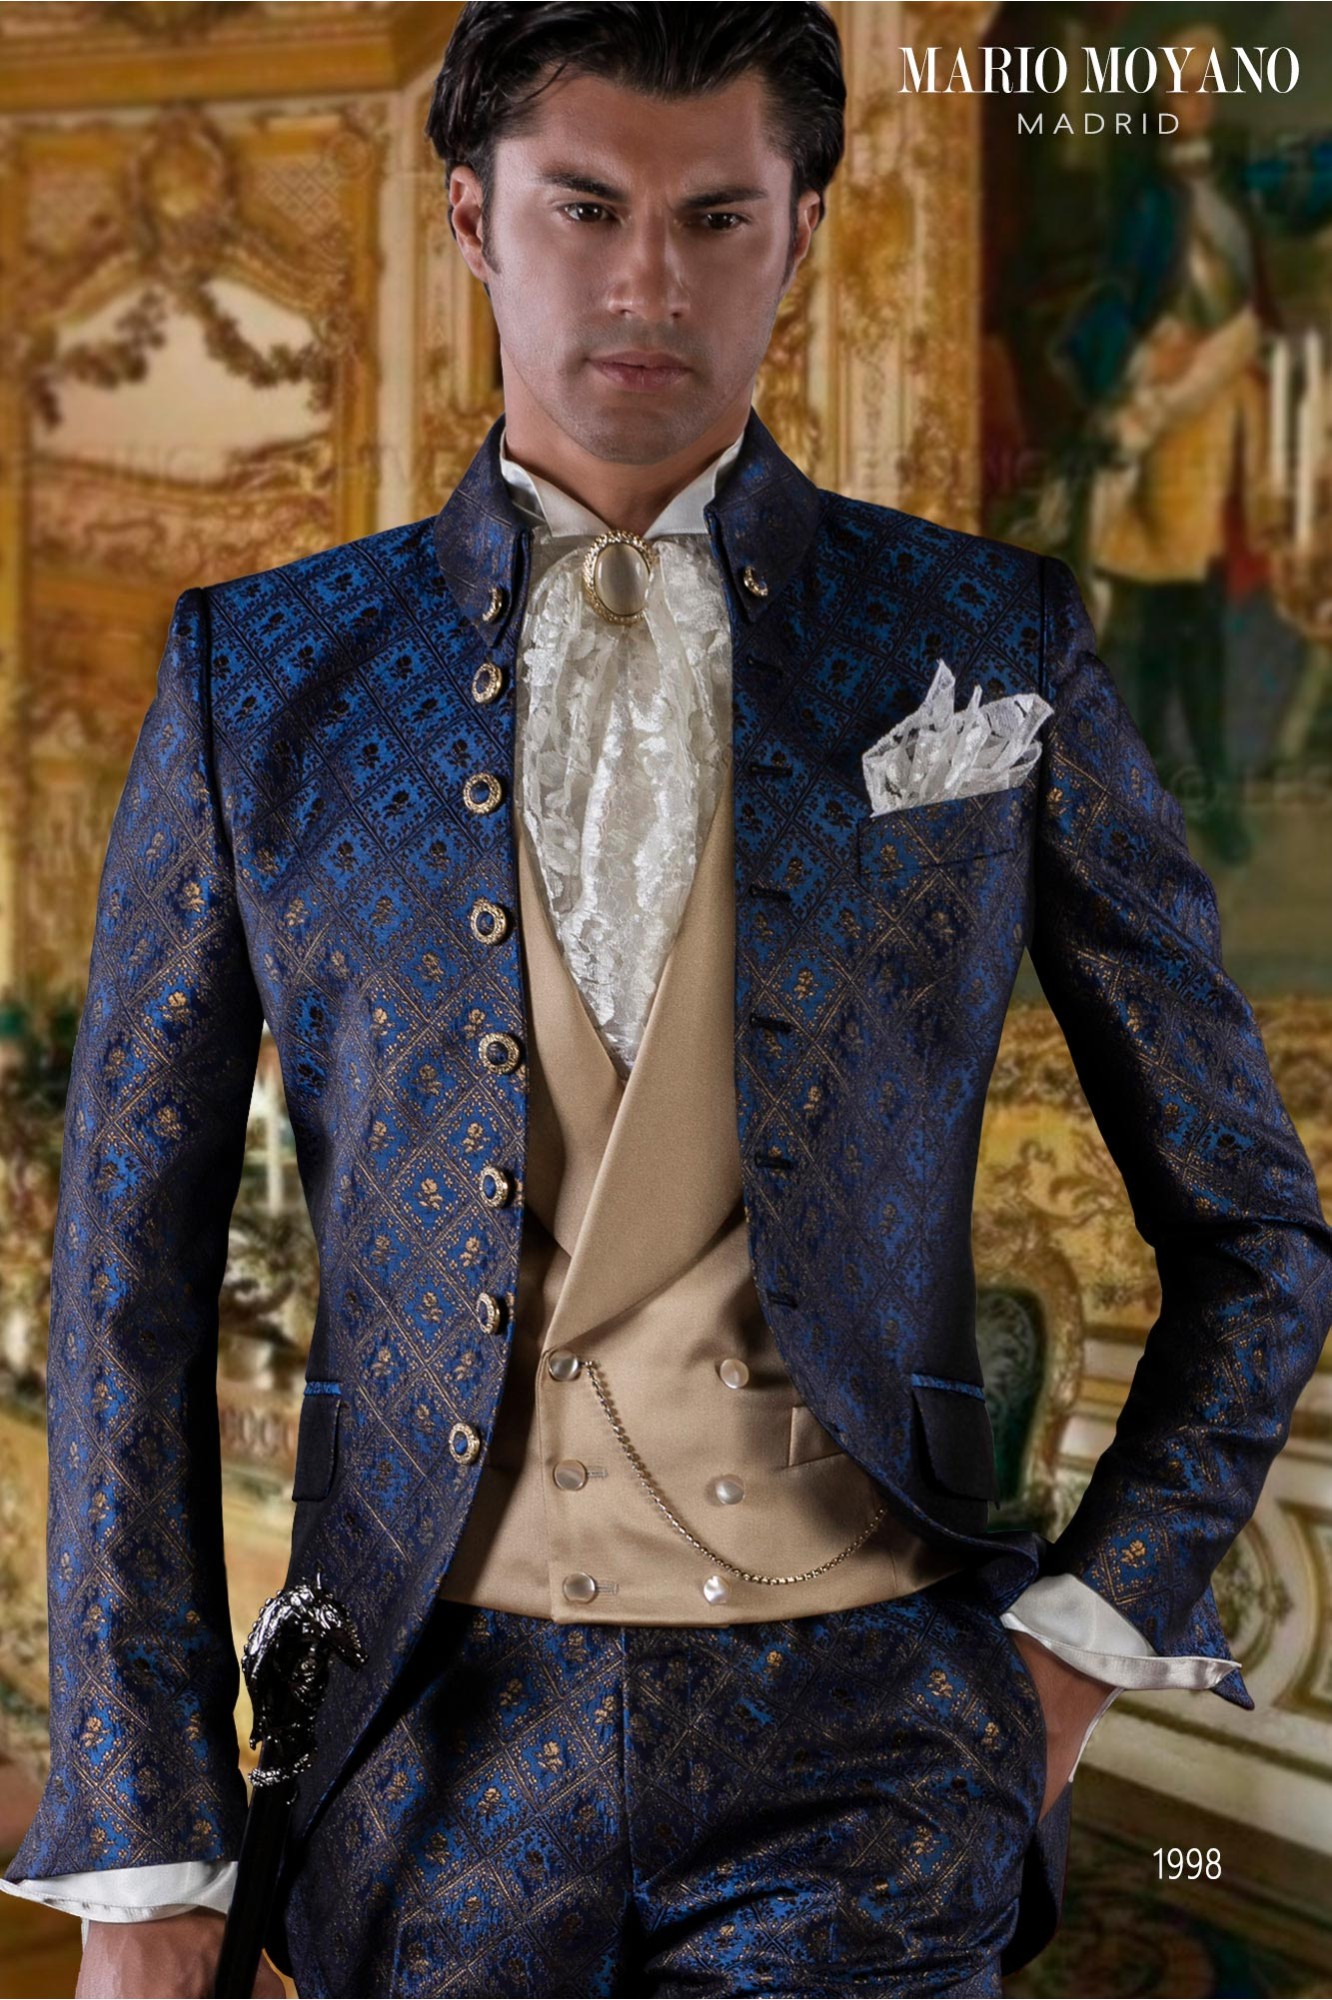 Blue and golden brocade gothic wedding frock coat 1898 Mario Moyano